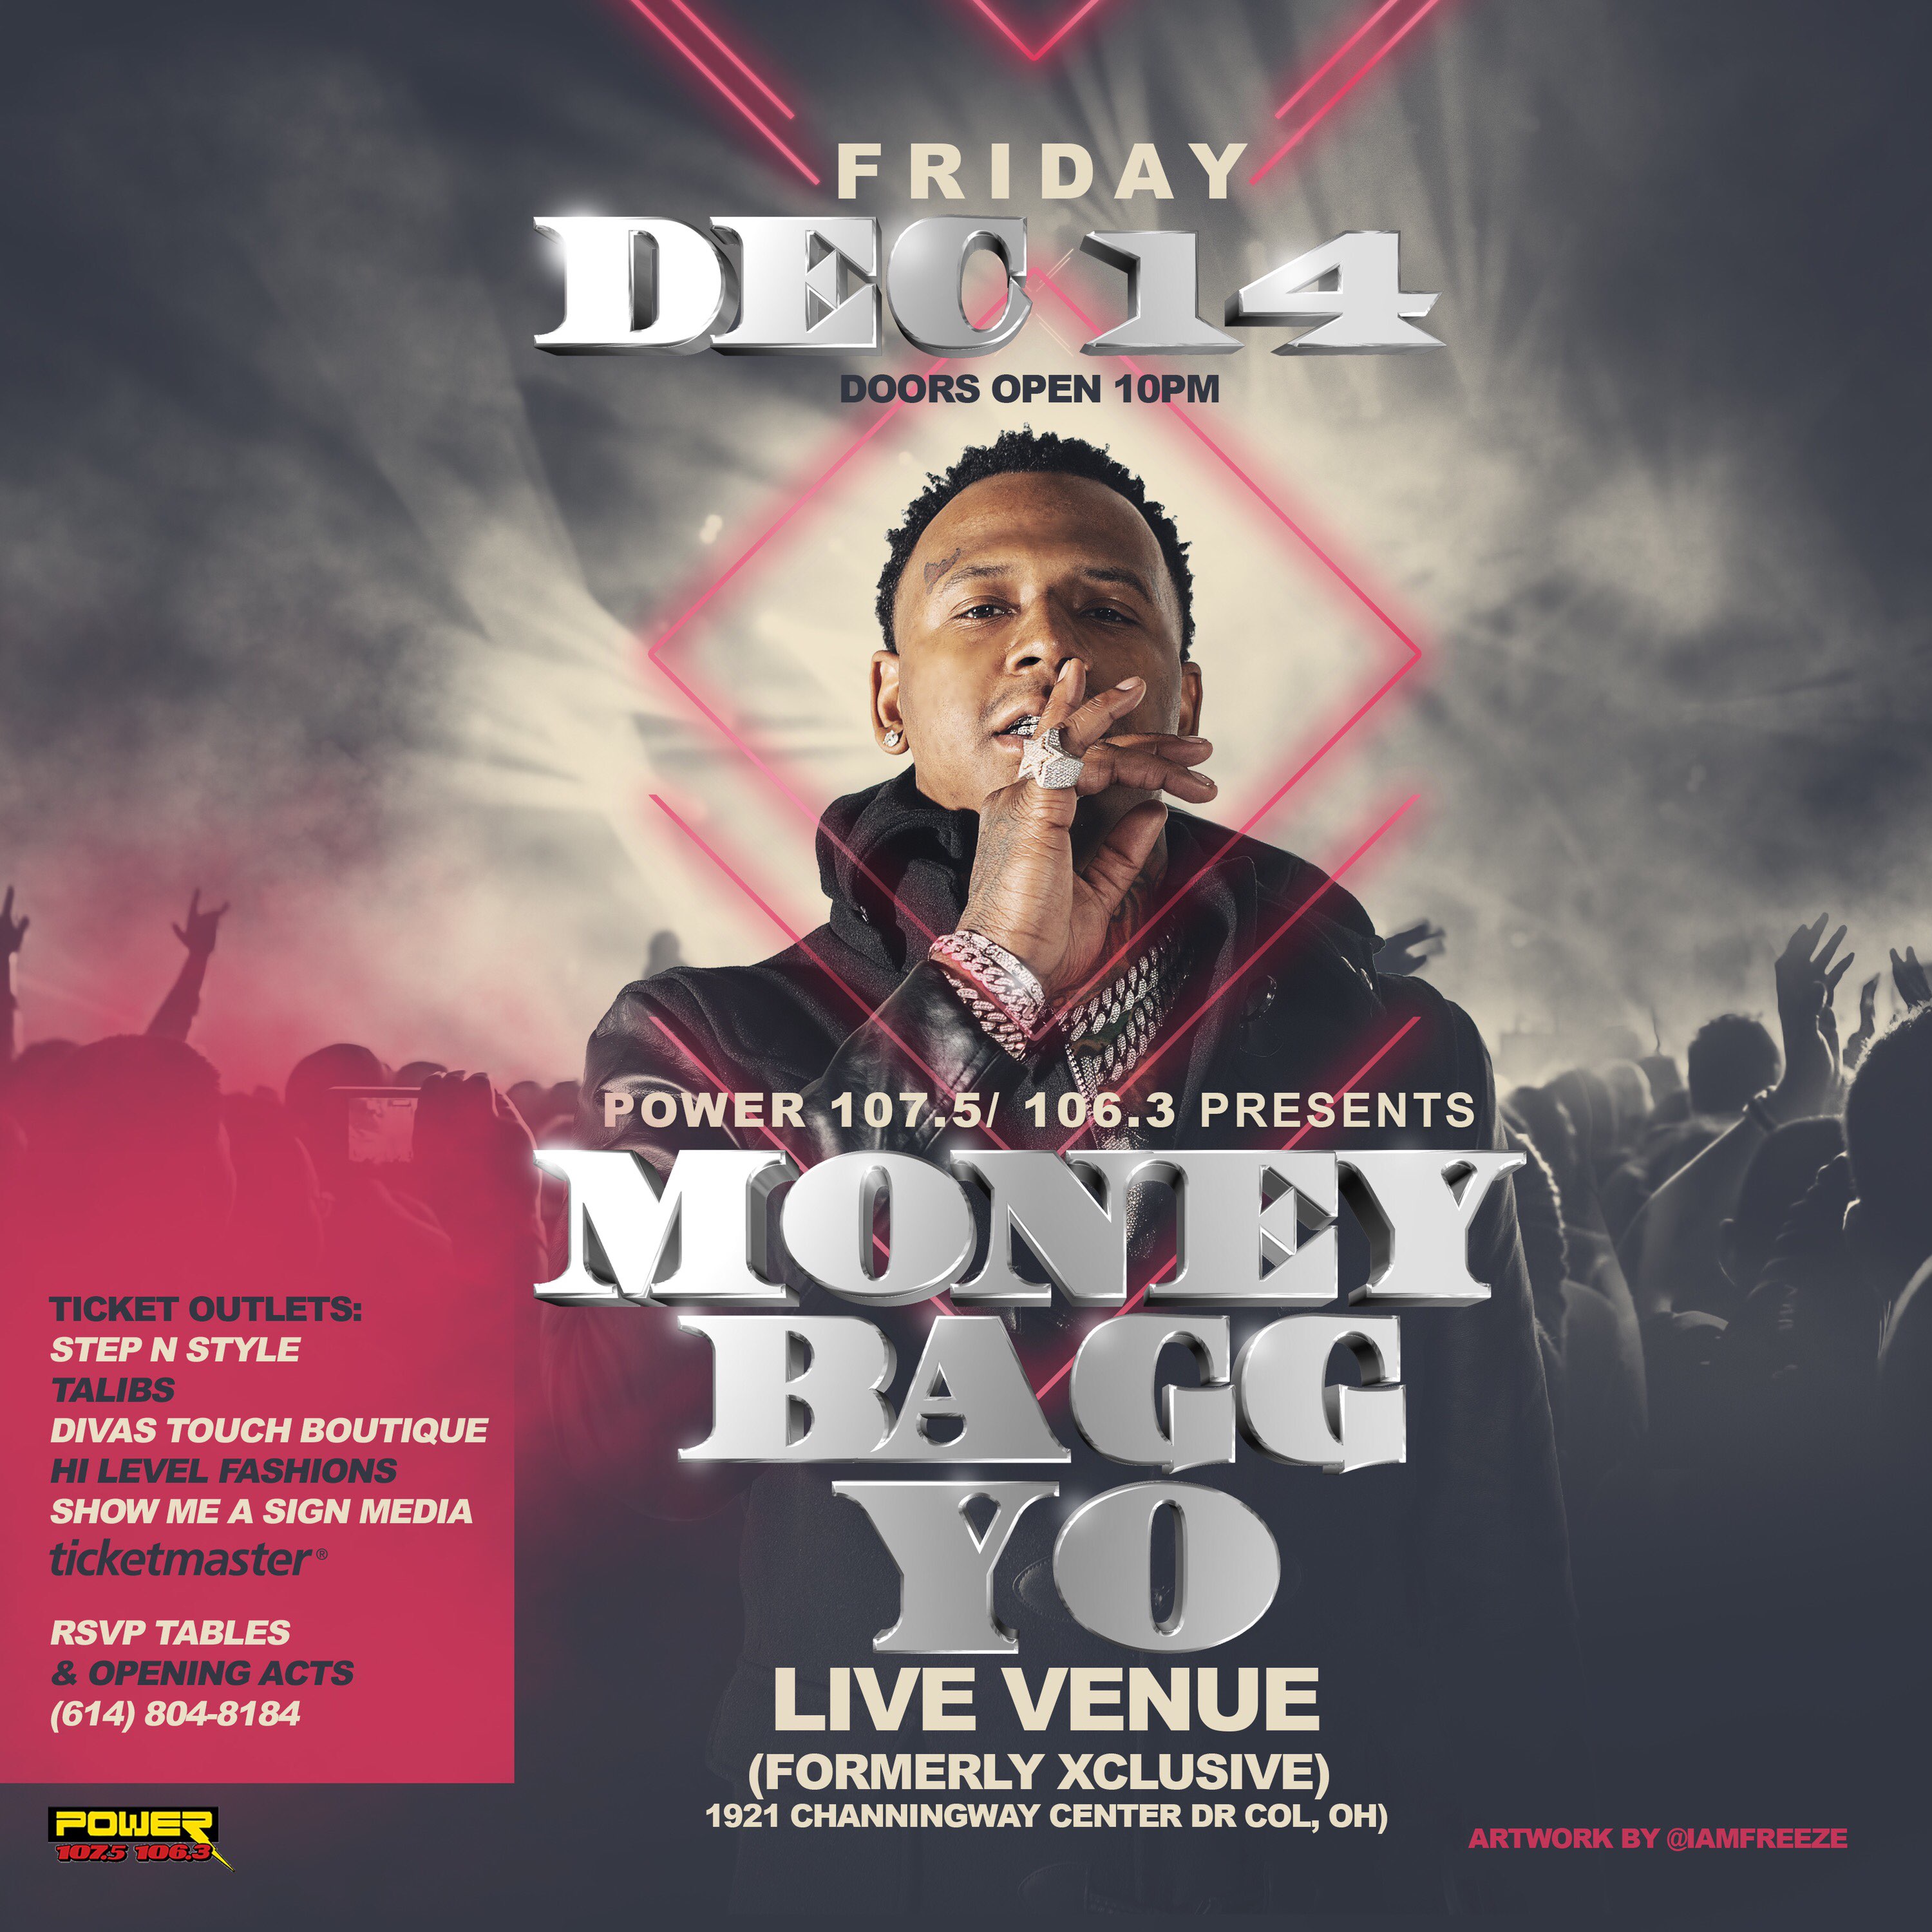 Money Bagg Yo Live – Friday, December 14th | Power 107.5